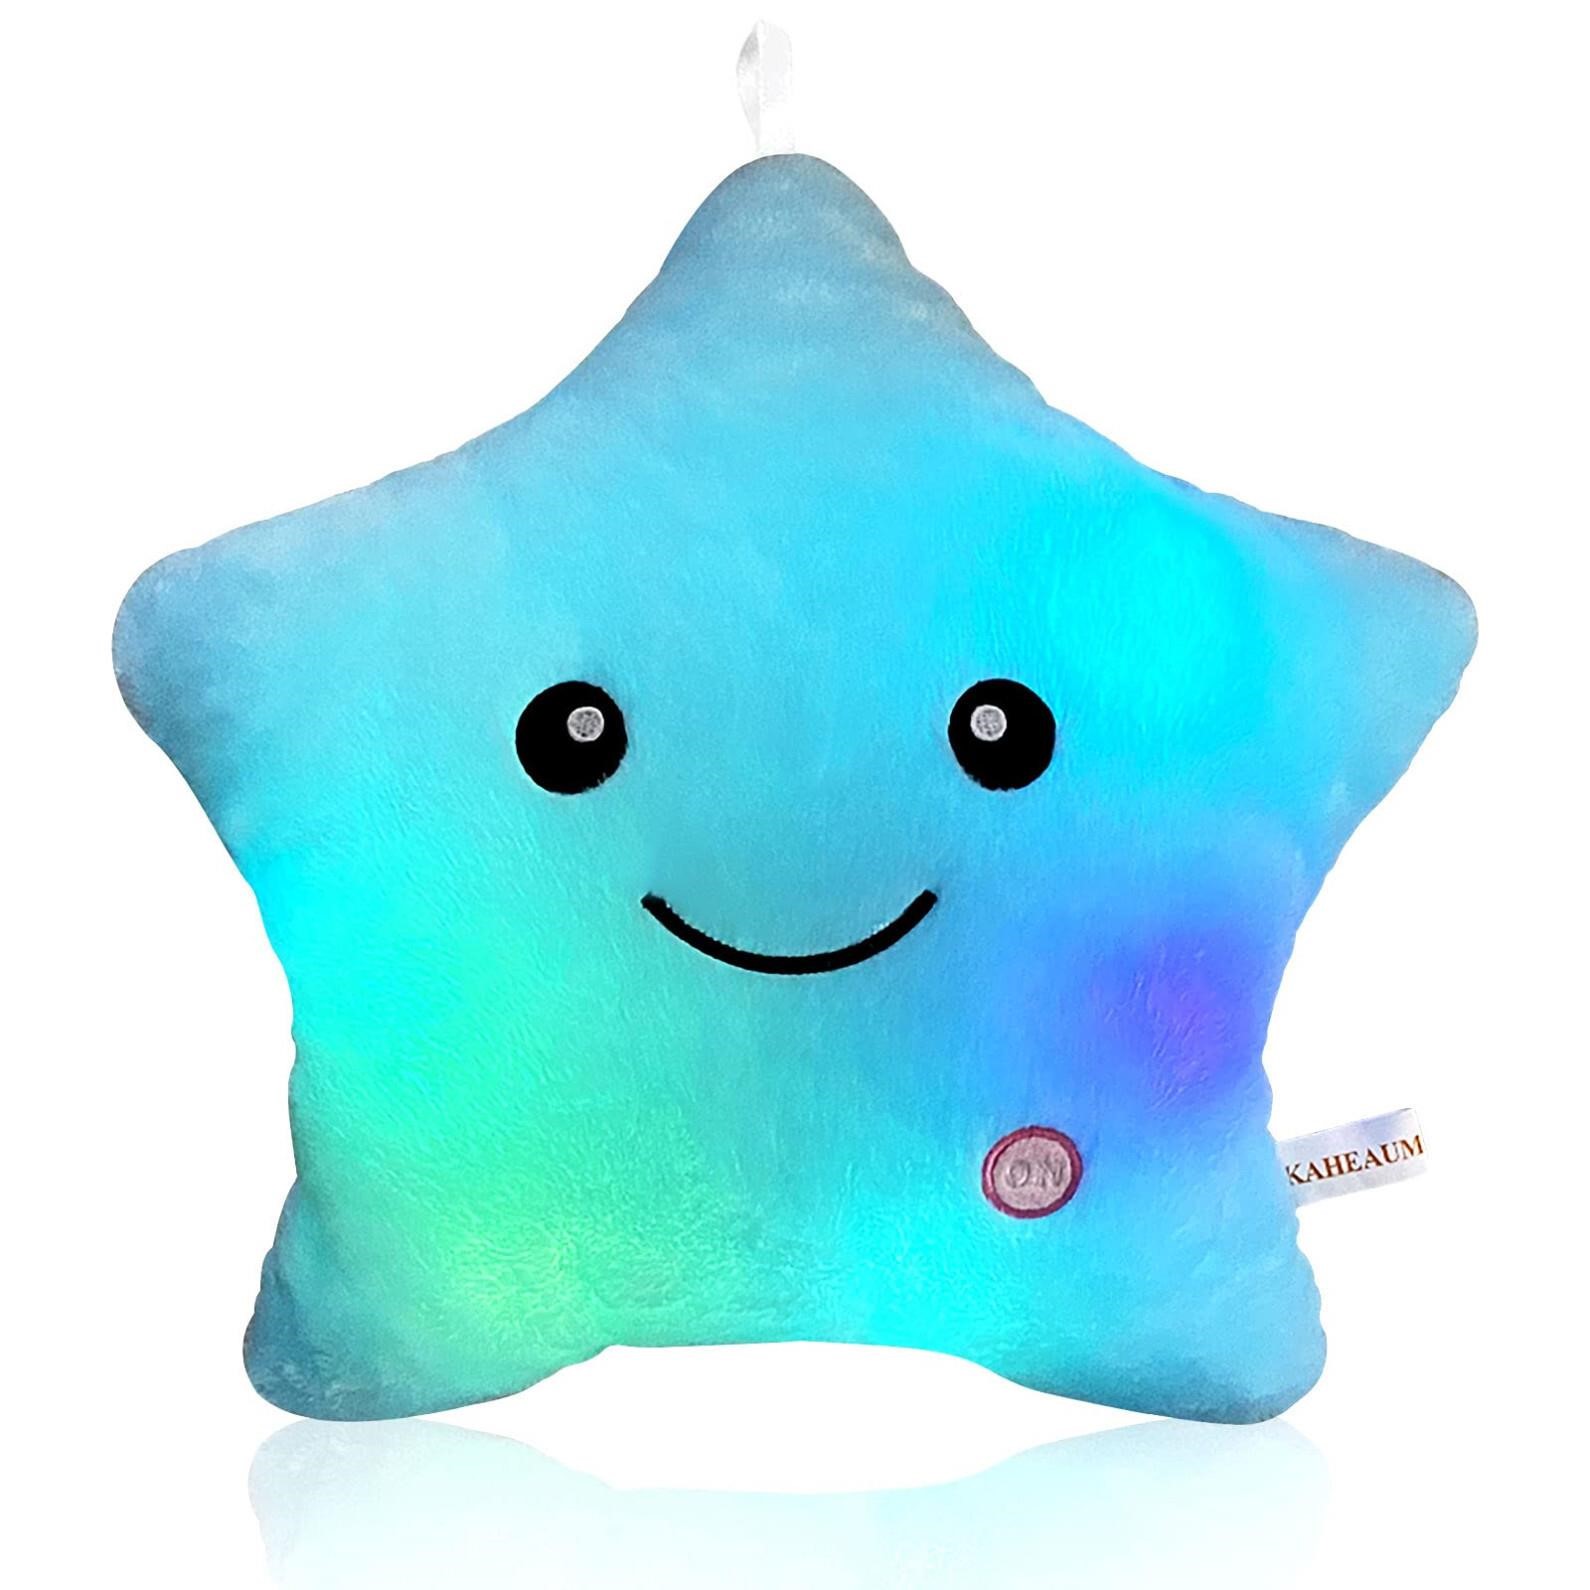 KAHEAUM Star Pillow Creative Twinkle Glowing LED N